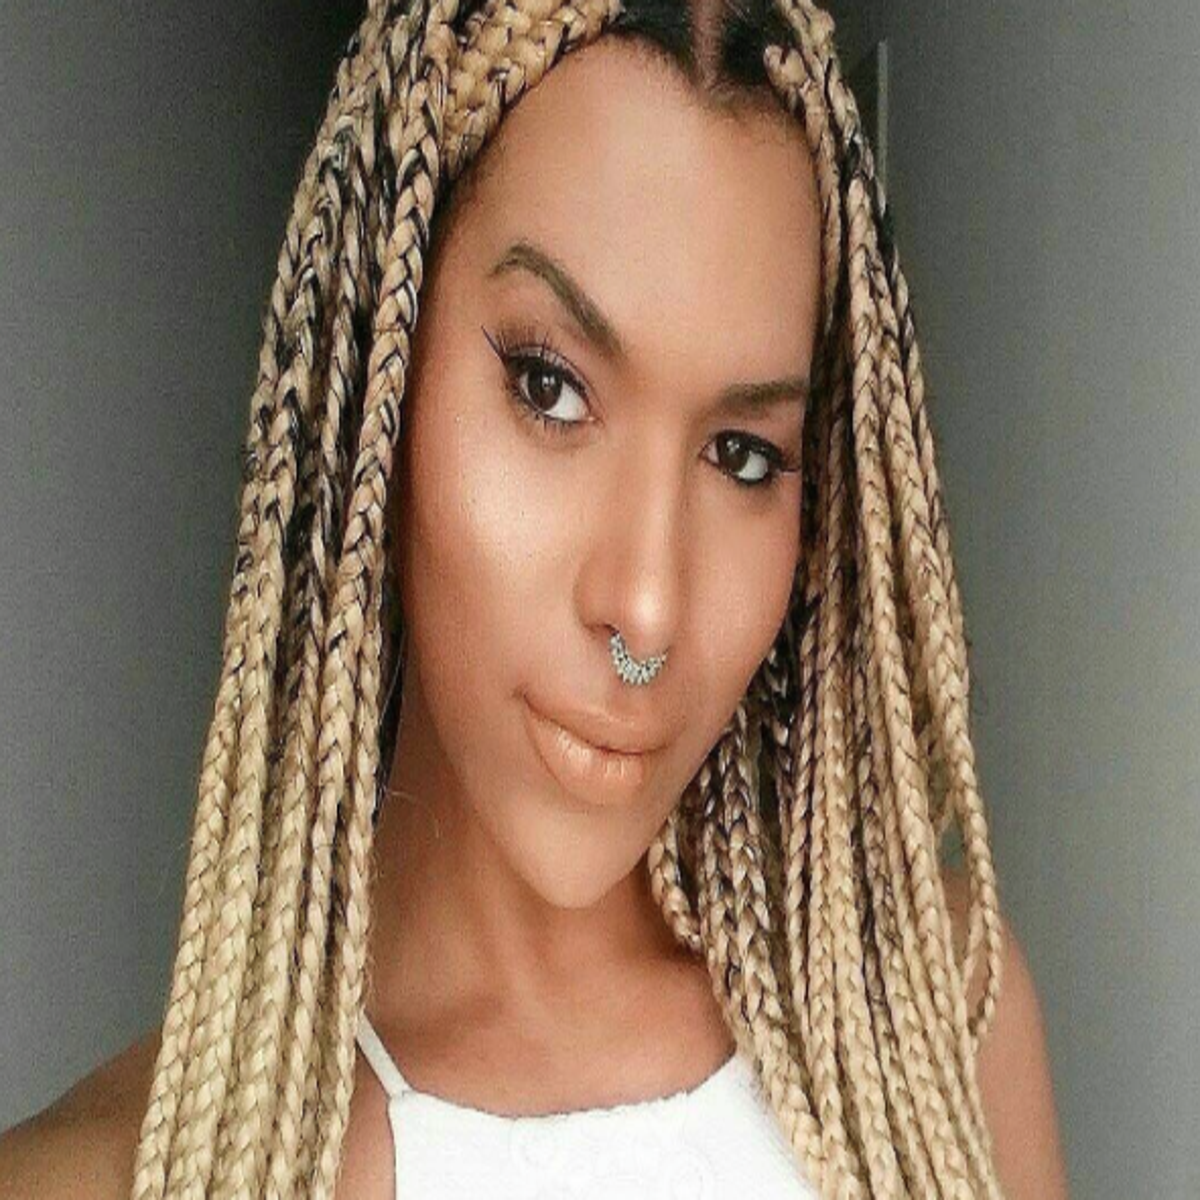 Transgender Model Munroe Bergdorf Hired By Illamasqua